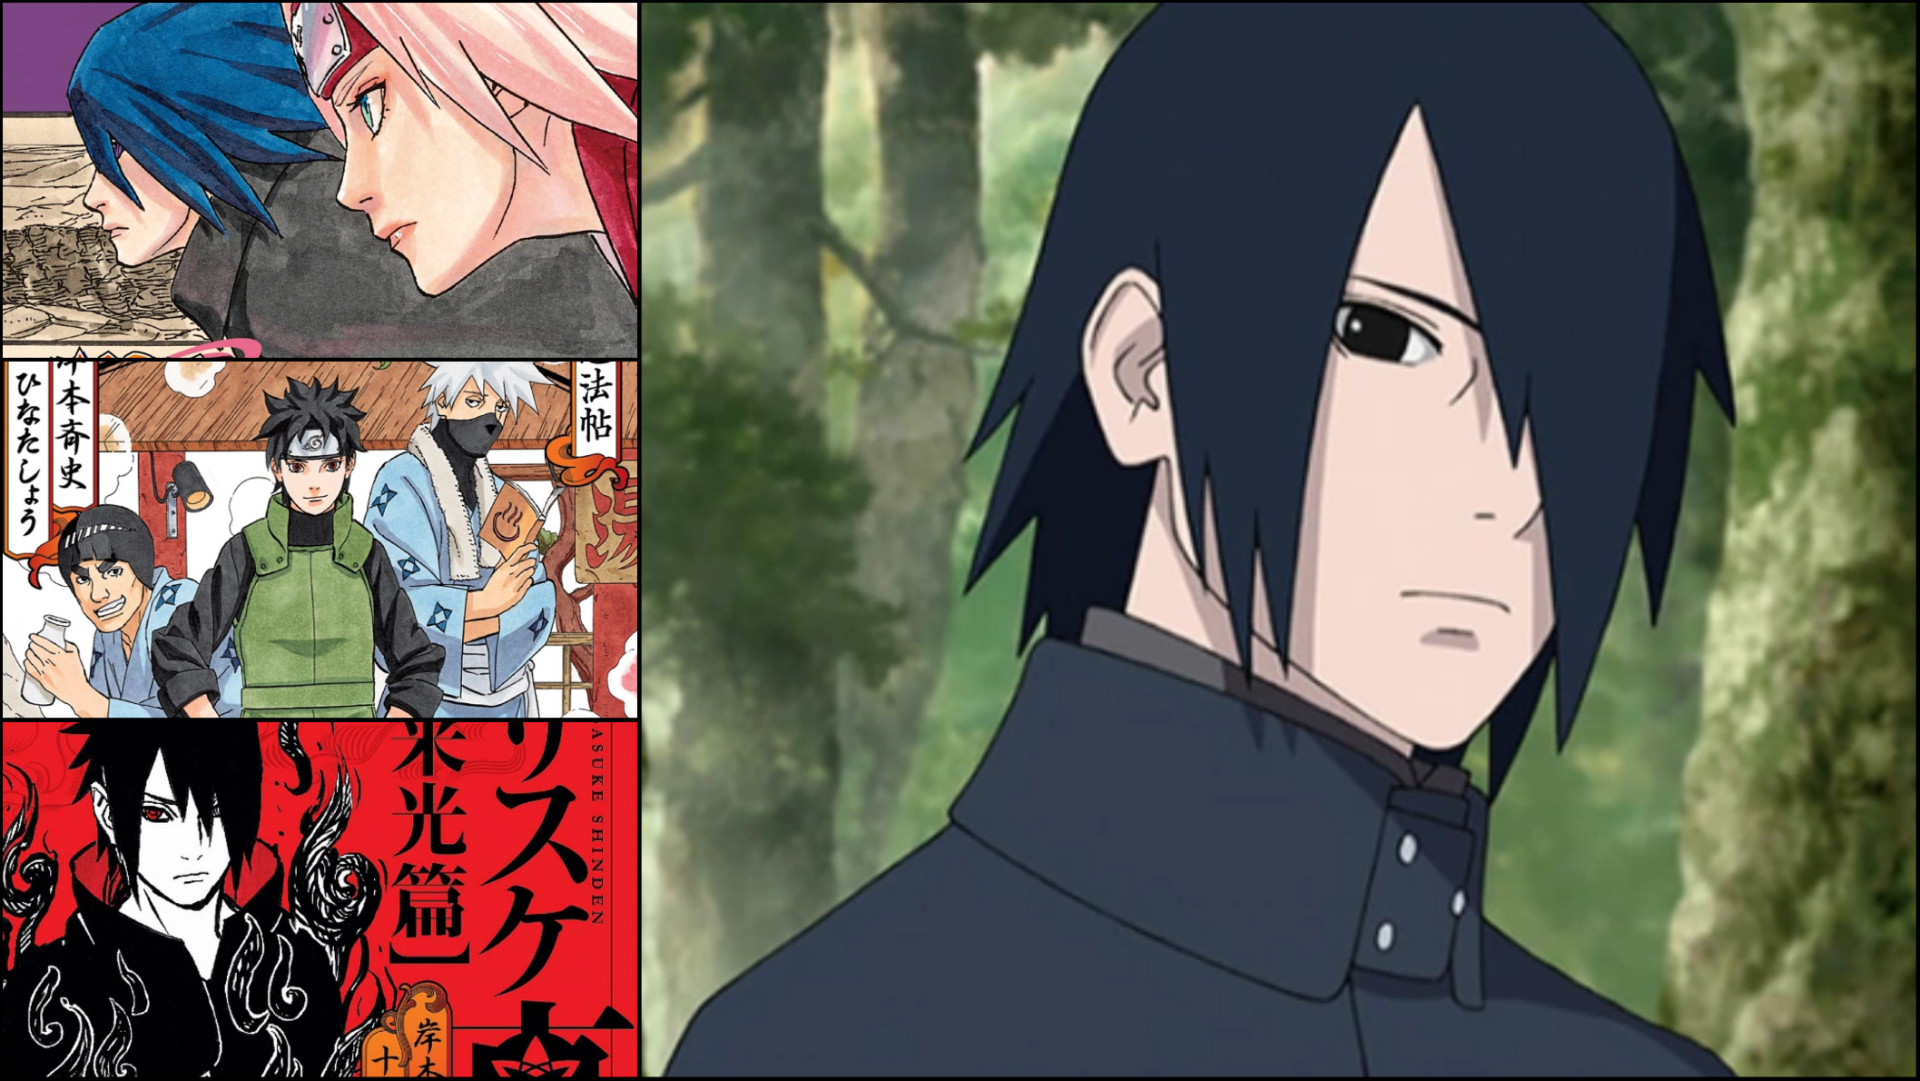 The Naruto Spin-off Manga miniseries was very needed to tell Sasuke's story